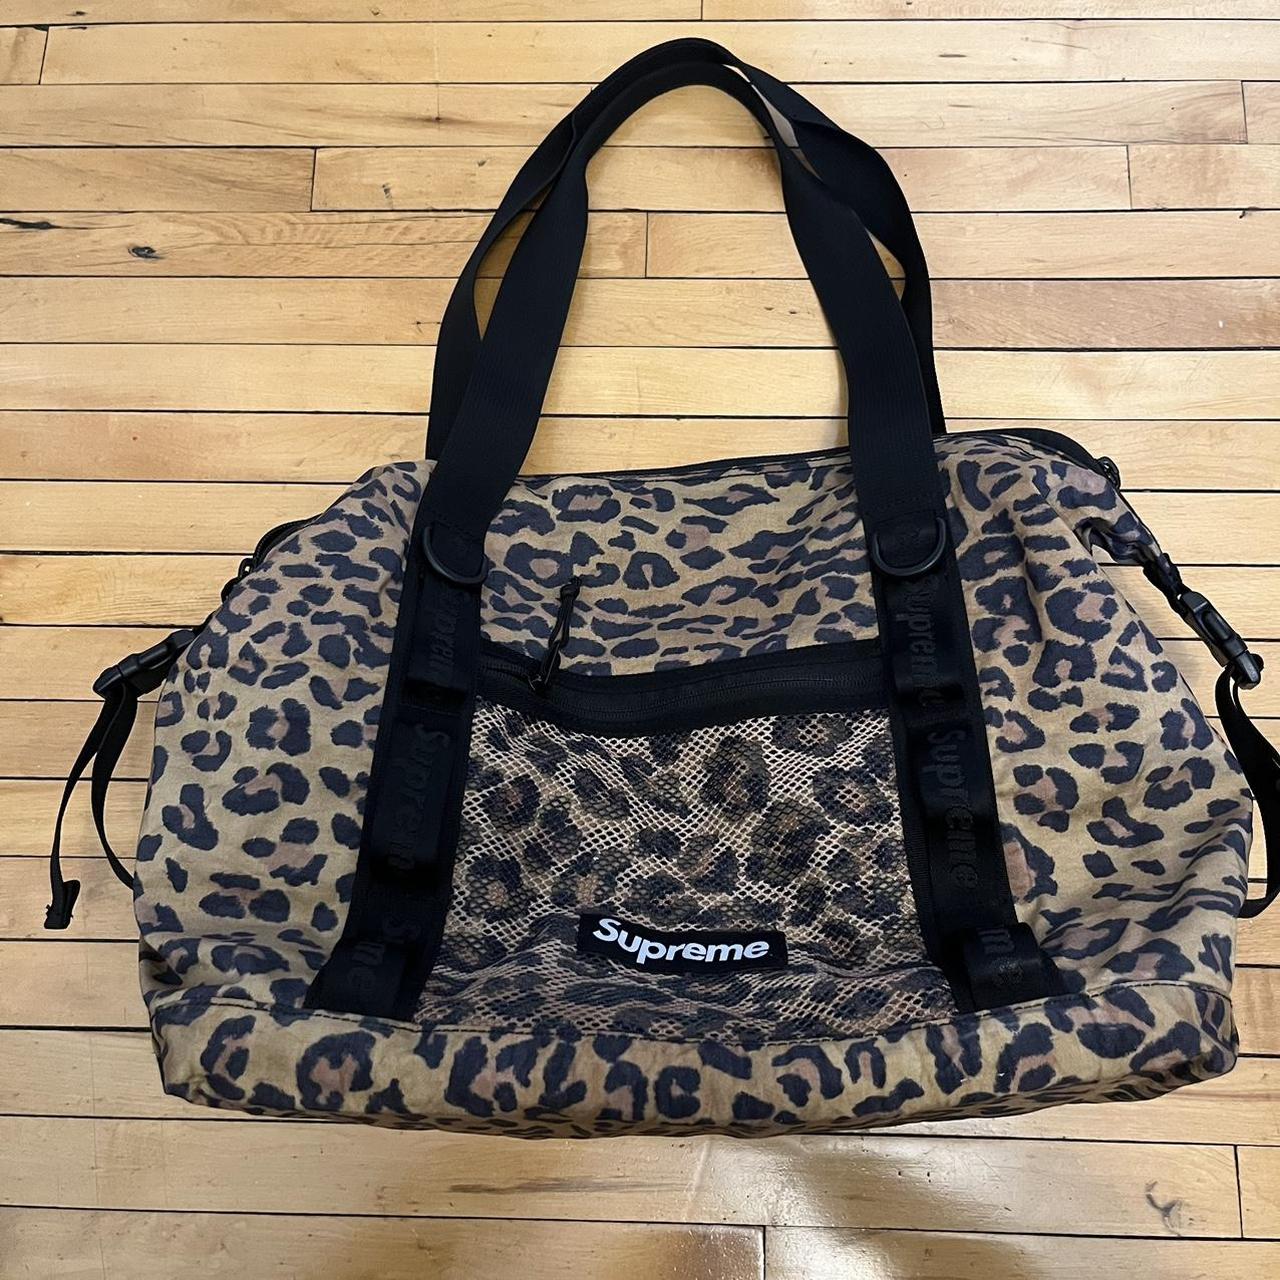 Supreme zip tote bag leopard print FW20, #supreme